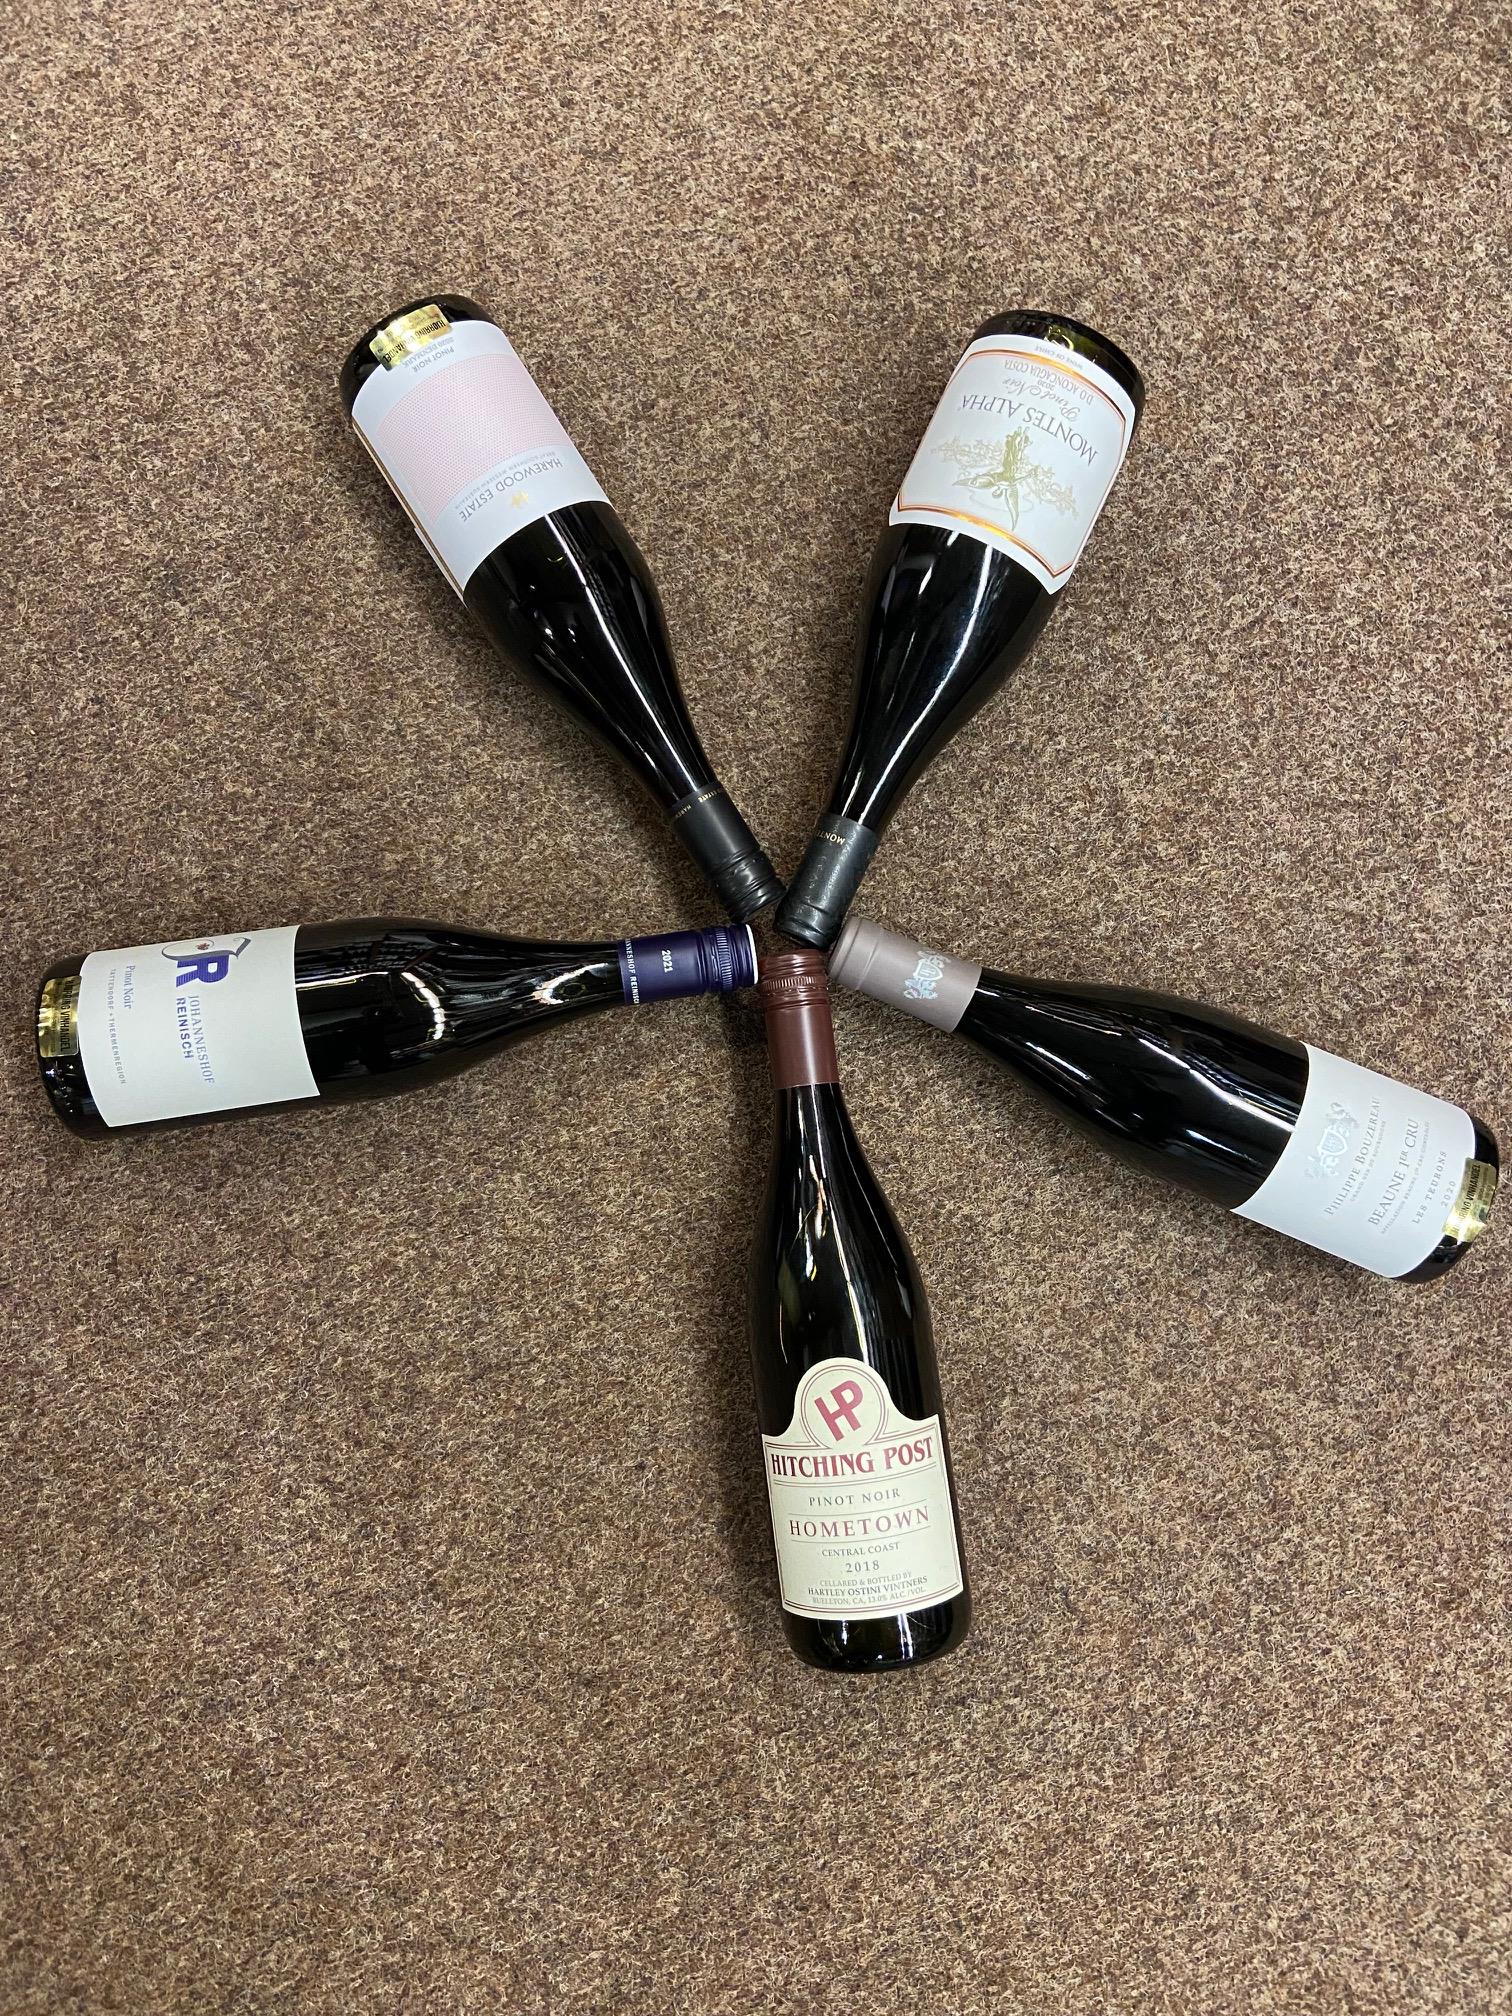 Pinot Noir smagning i vinkælderen torsdag den 22. februar kl. 18.30